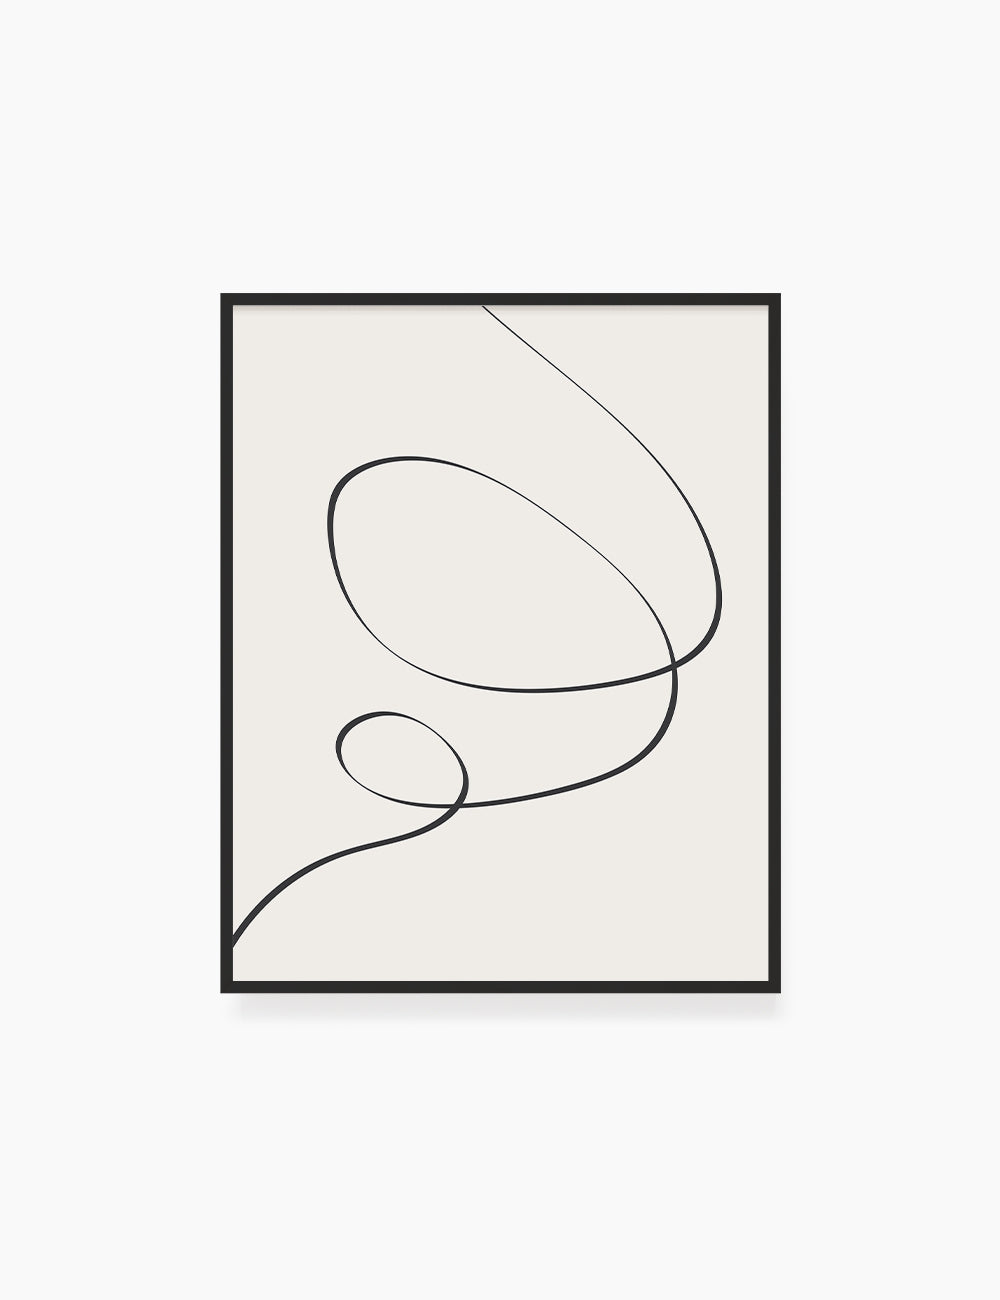 MINIMAL LINE ART. Abstract Swirl Shape. Boho Aesthetic. Beige. Black. Printable Wall Art Illustration. - PAPER MOON Art & Design